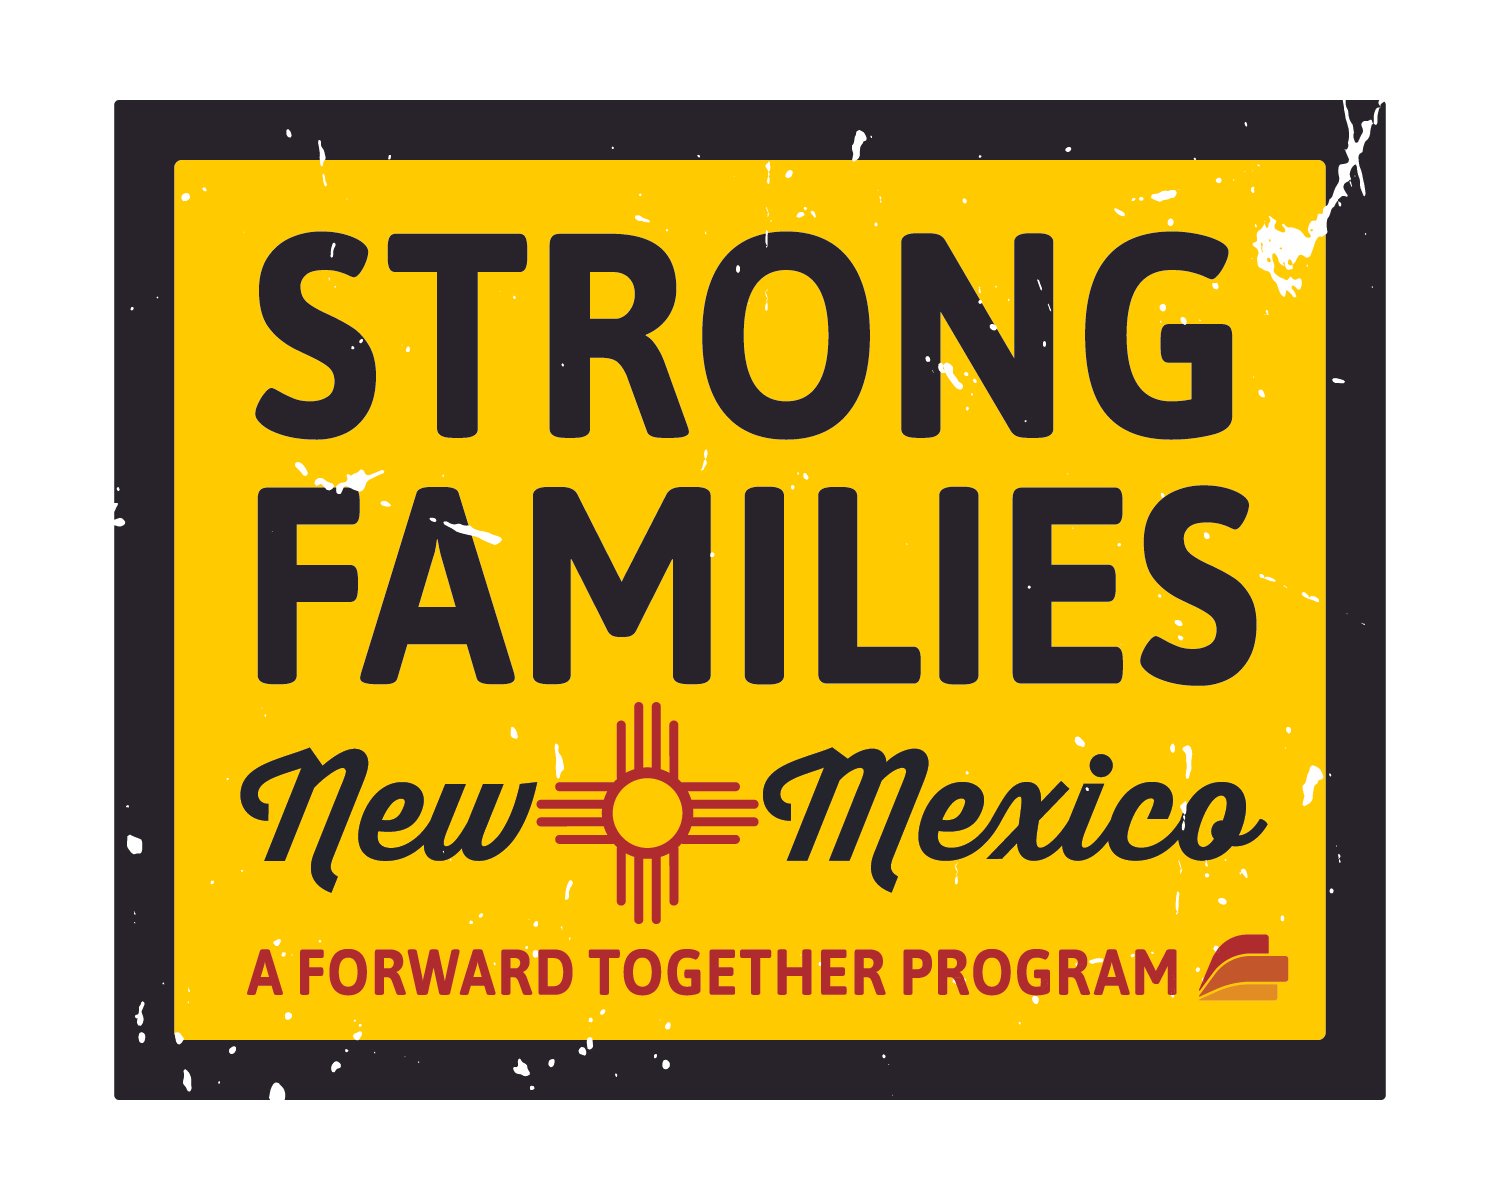 logo-strong-families-new-mexico-1500x1200.jpg